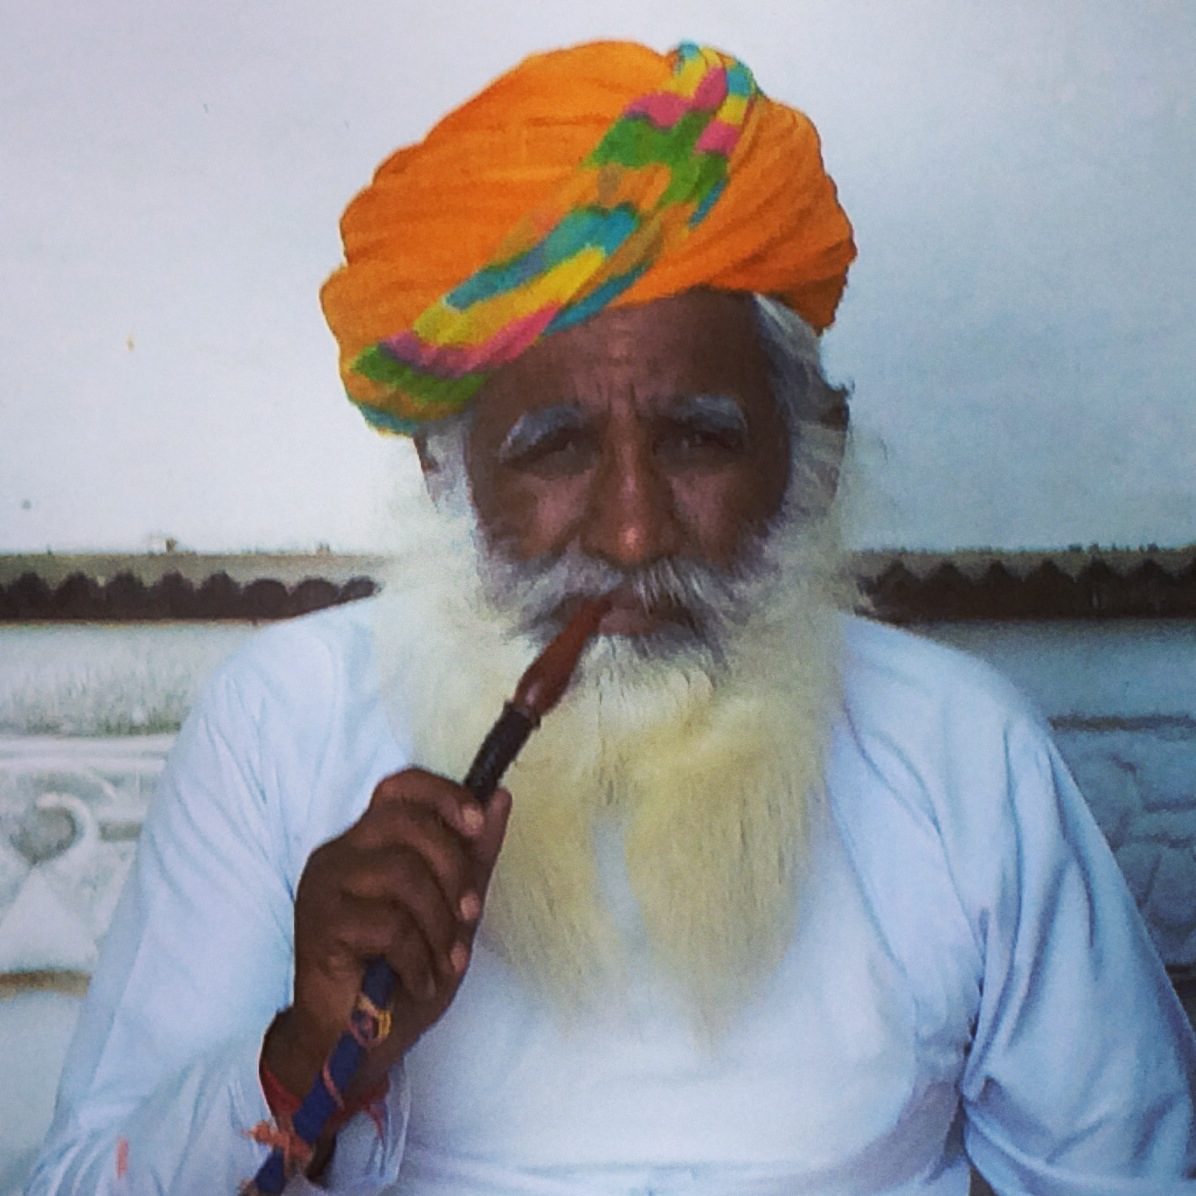 old man with a yellowish beard and orange turban smoking a hookah pipe